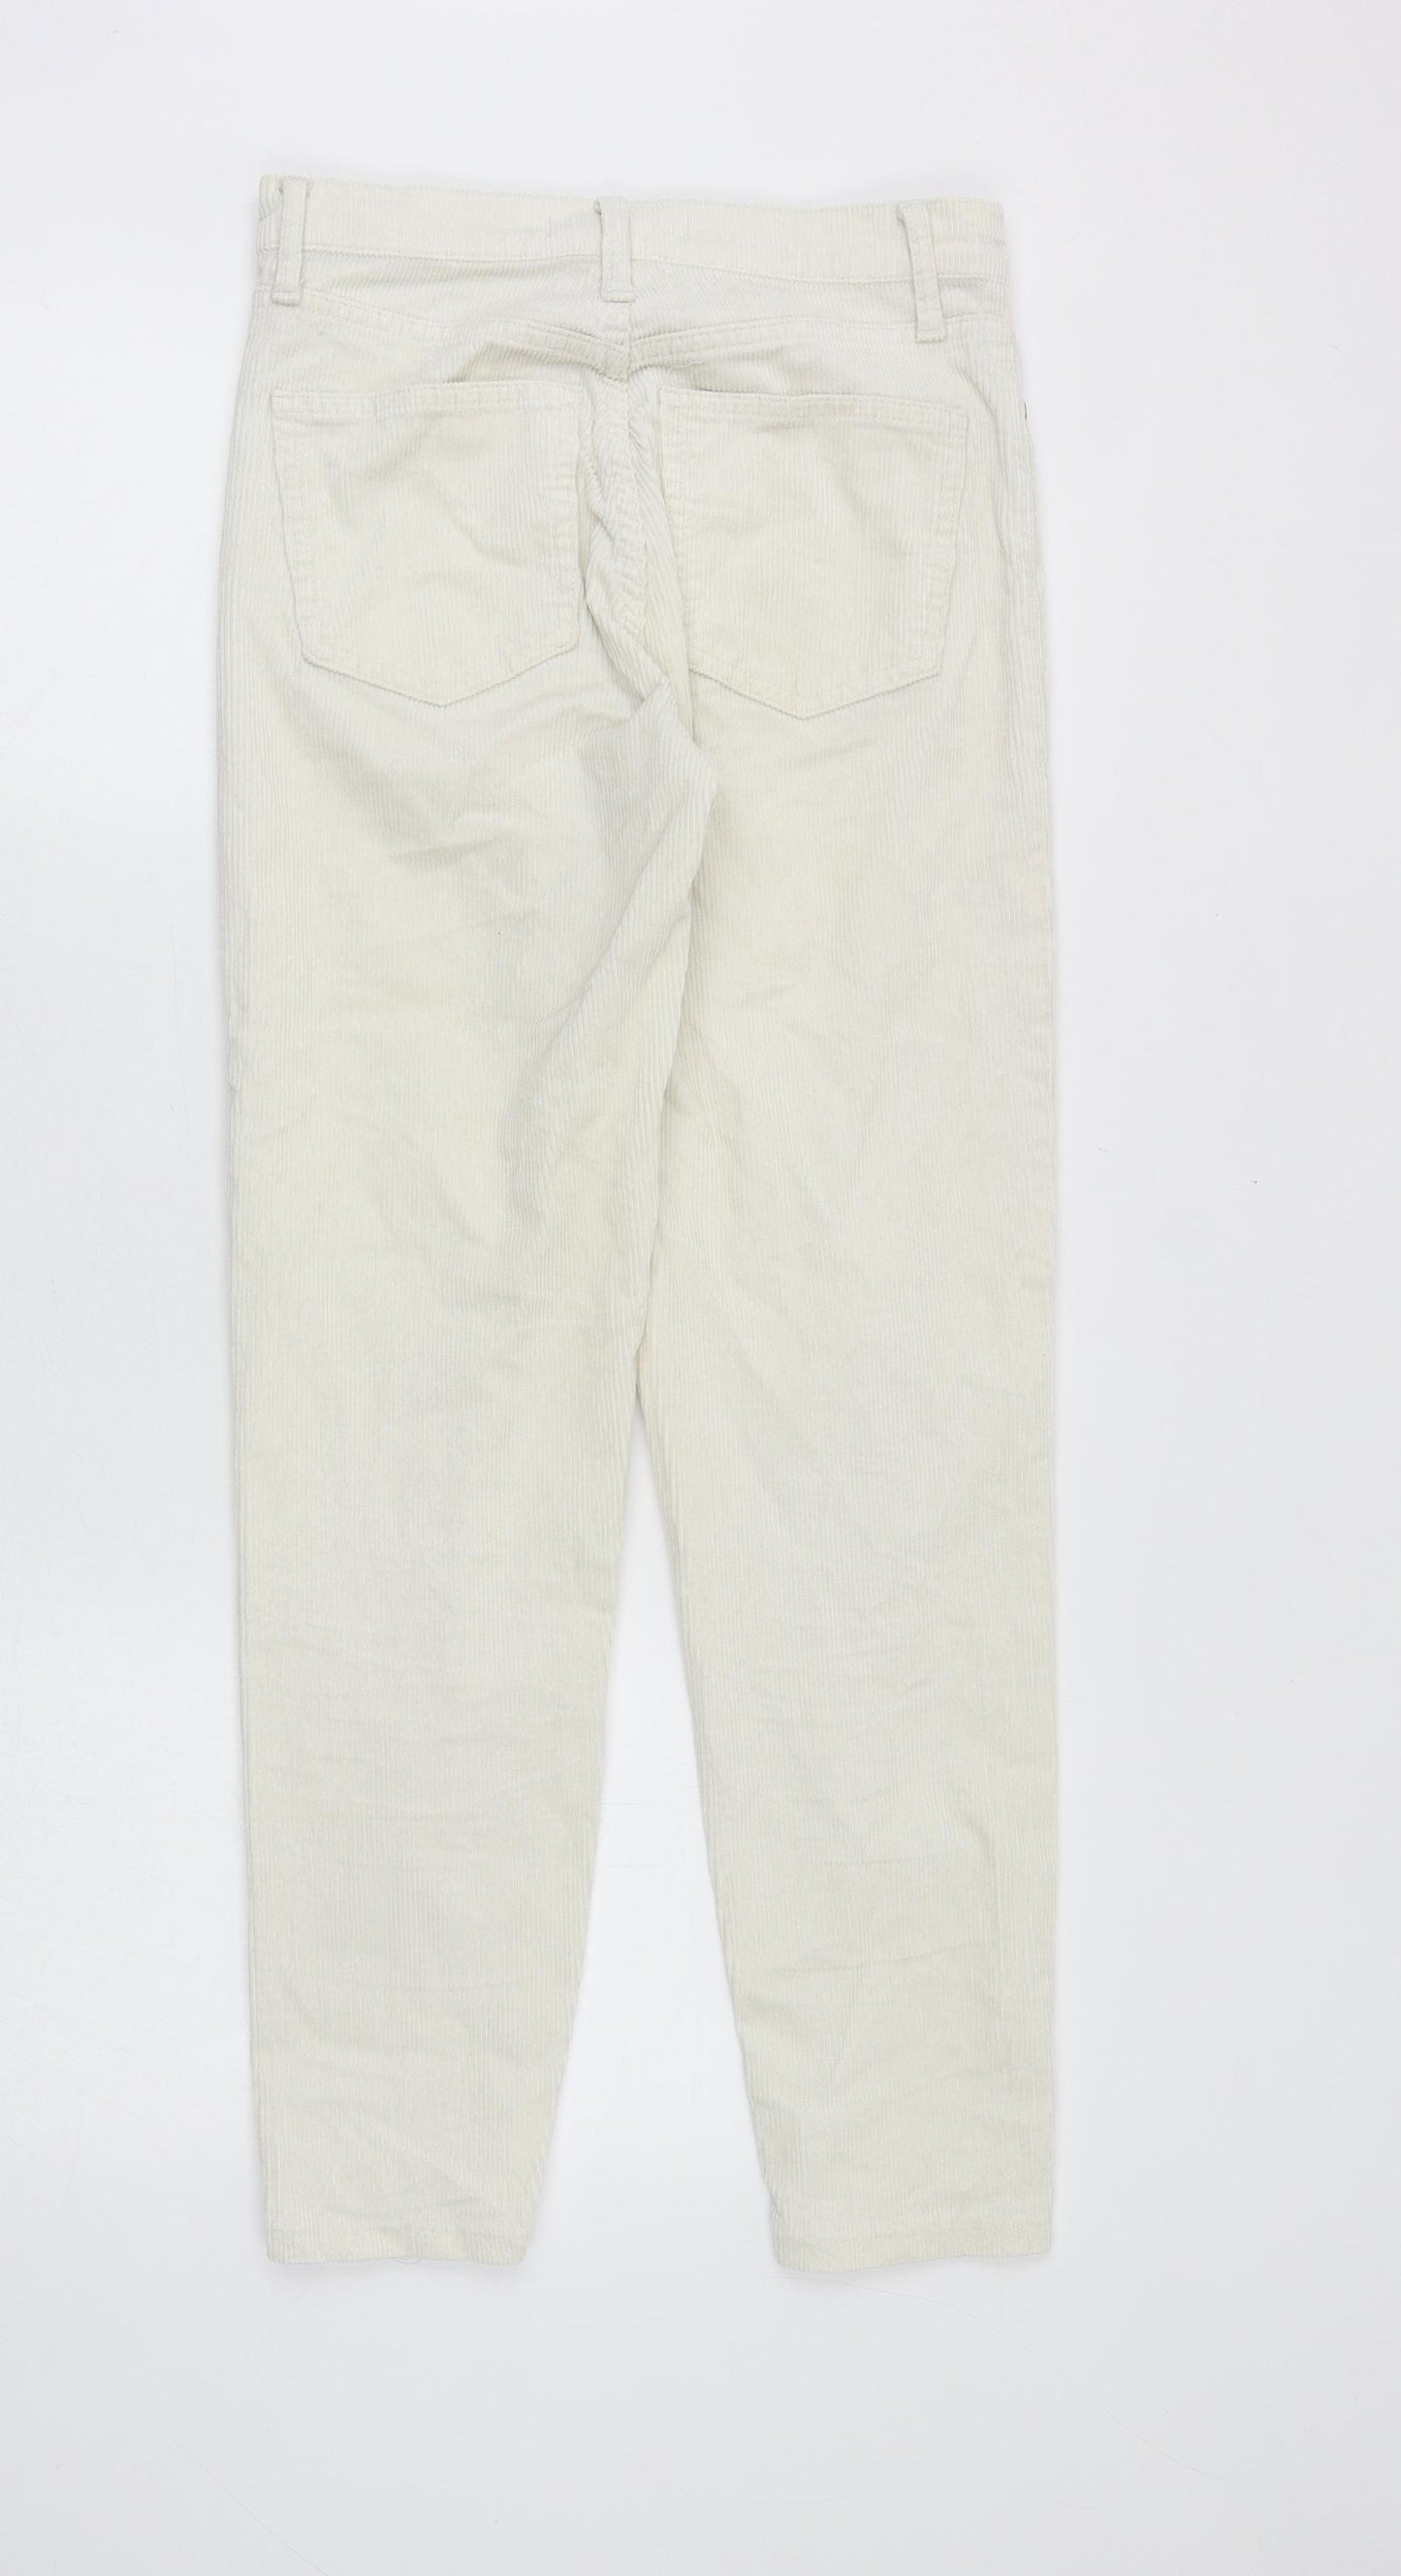 Uniqlo Girls Beige Cotton Chino Trousers Size 12-13 Years Regular Zip